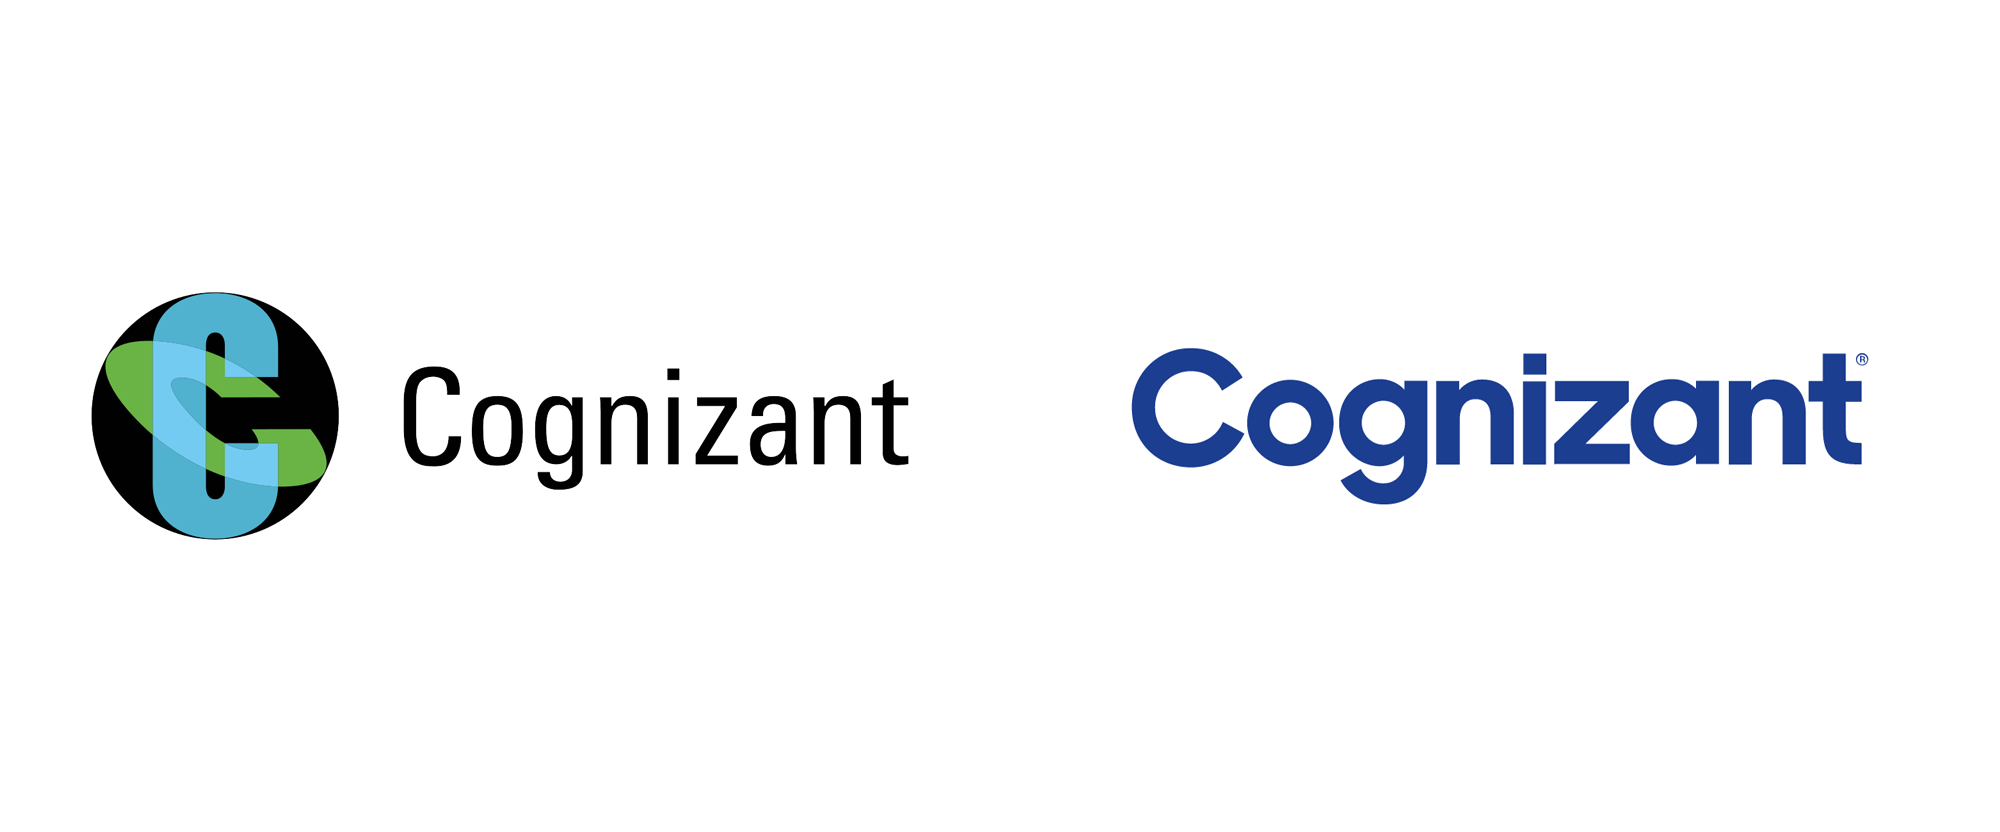 Cognizant changed brand logo design